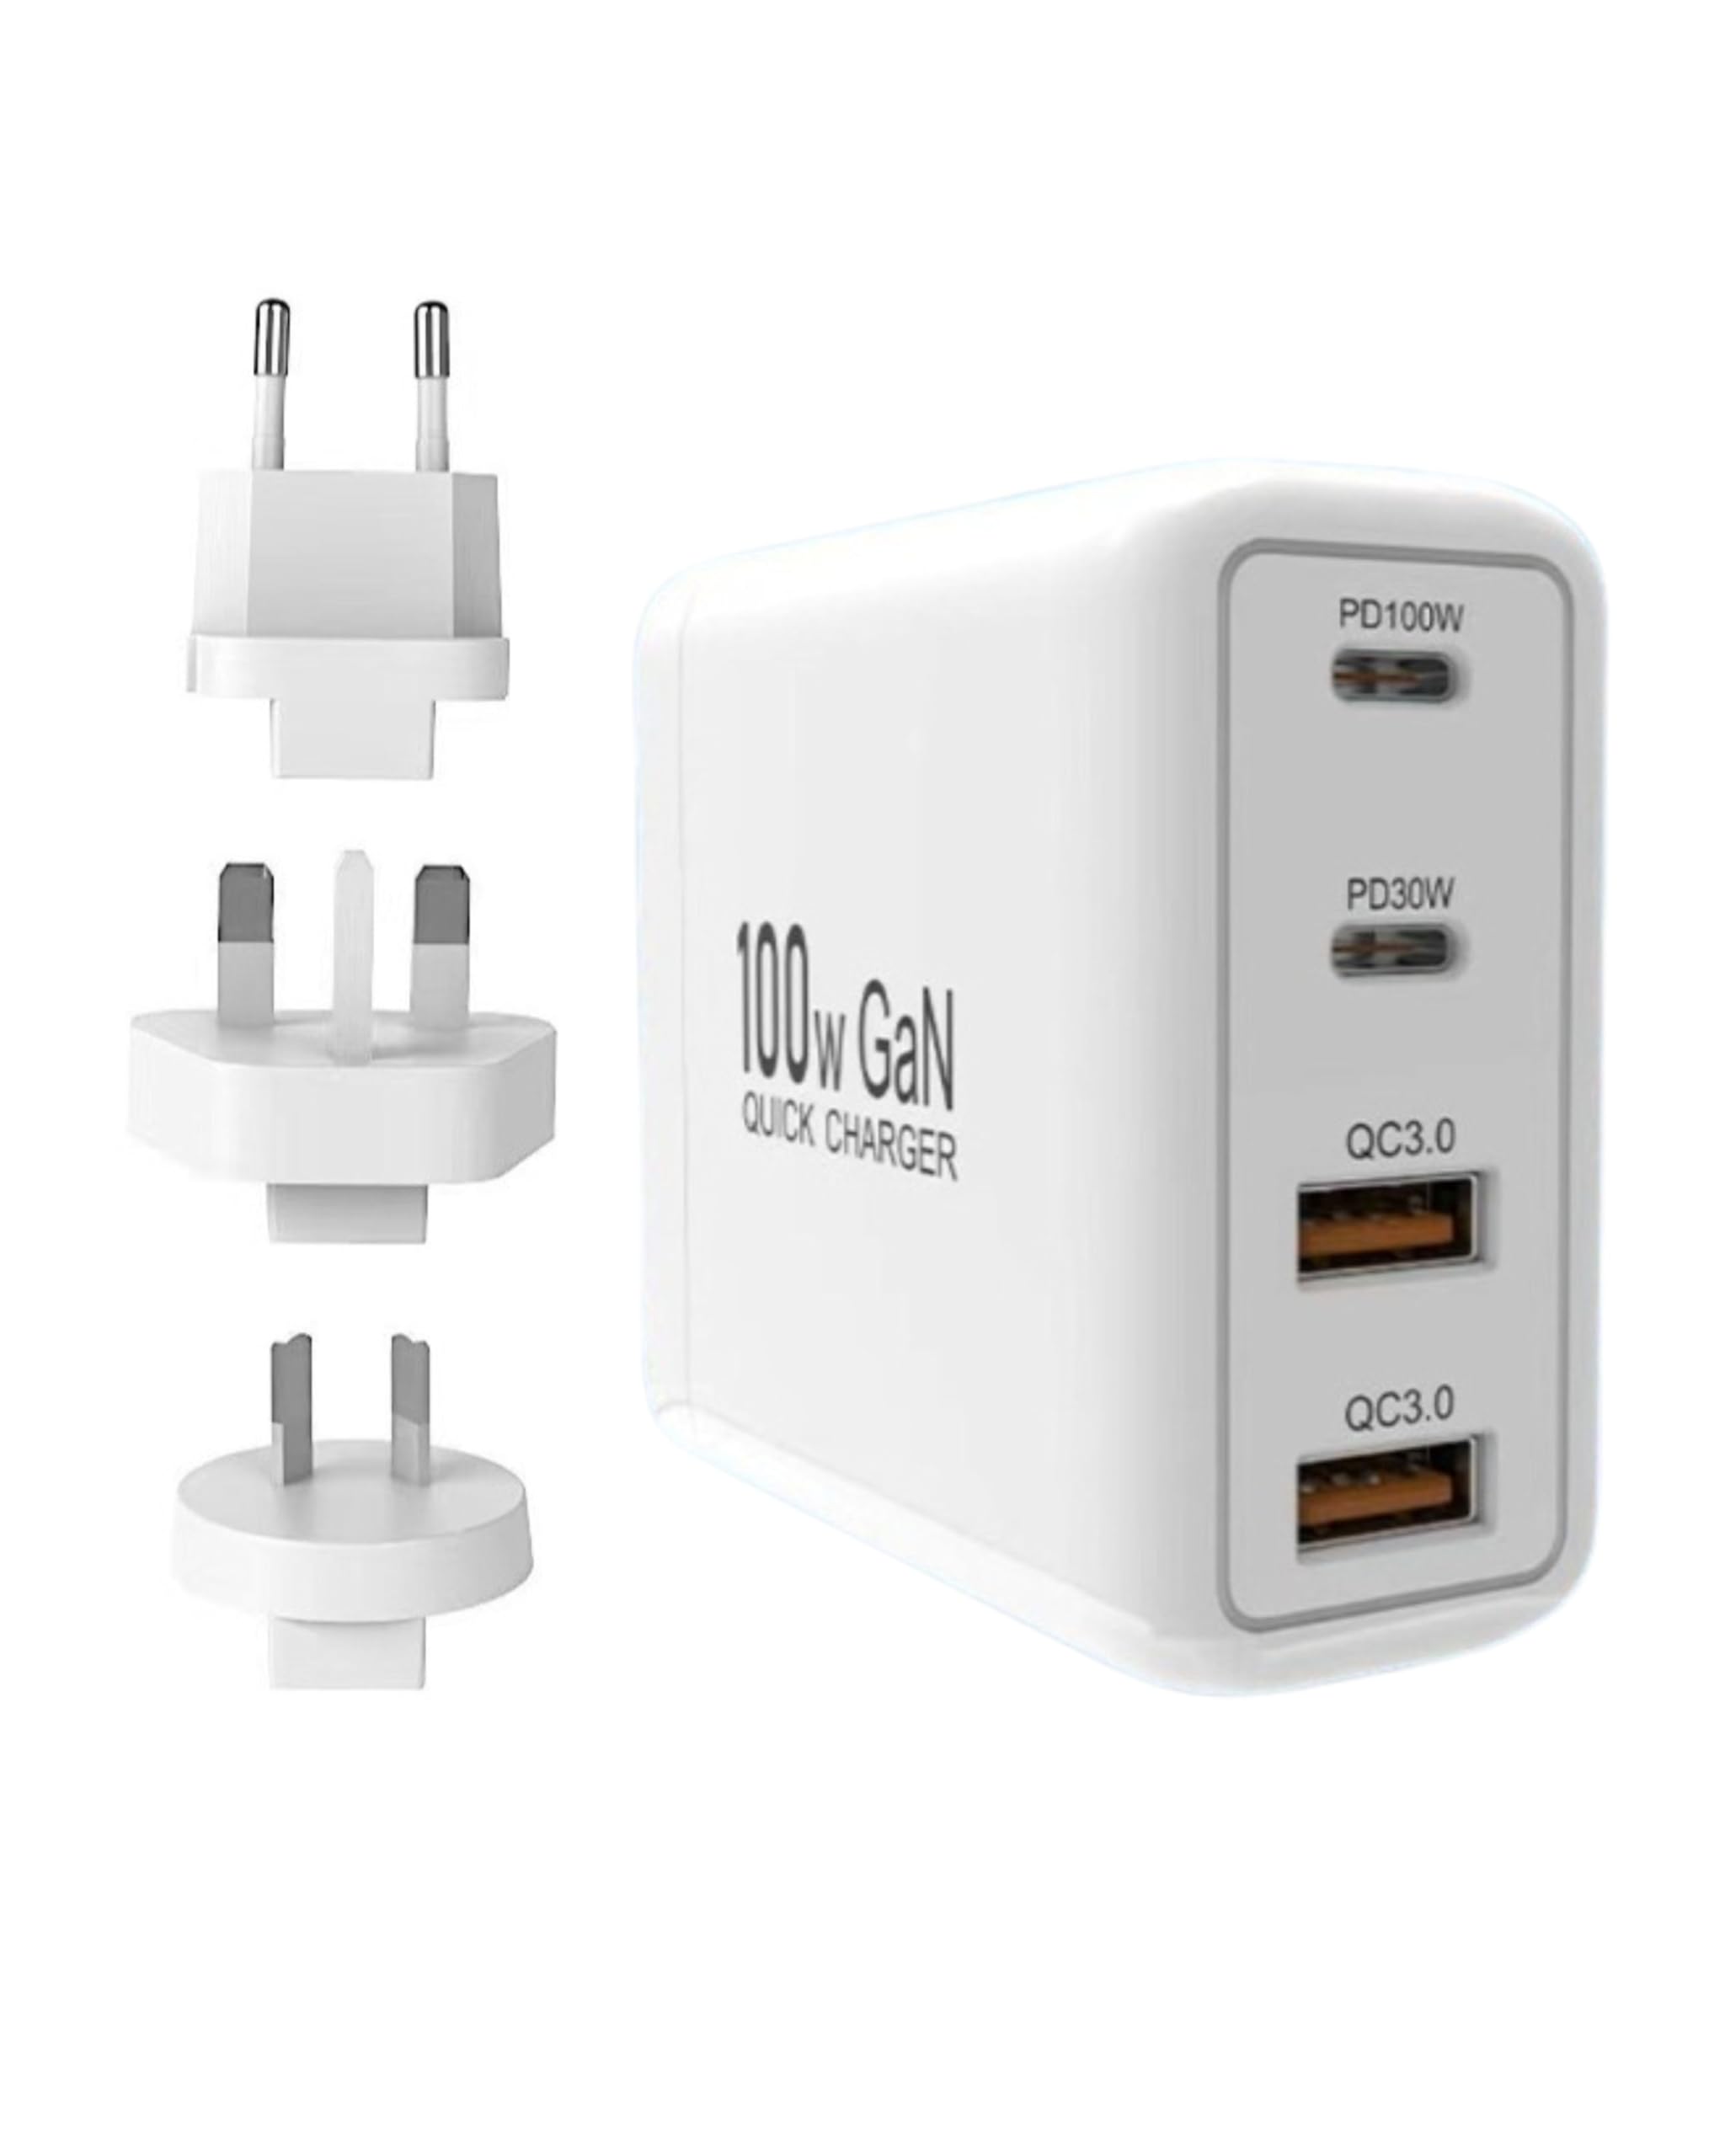 Elebest USB C Ladegerät 100W-GaN III Chip, USB Ladegerät, GaN ladegerät, USB c schnellladegerät, Schnellladefunktion - Netzteil - für iPhone iPad Samsung